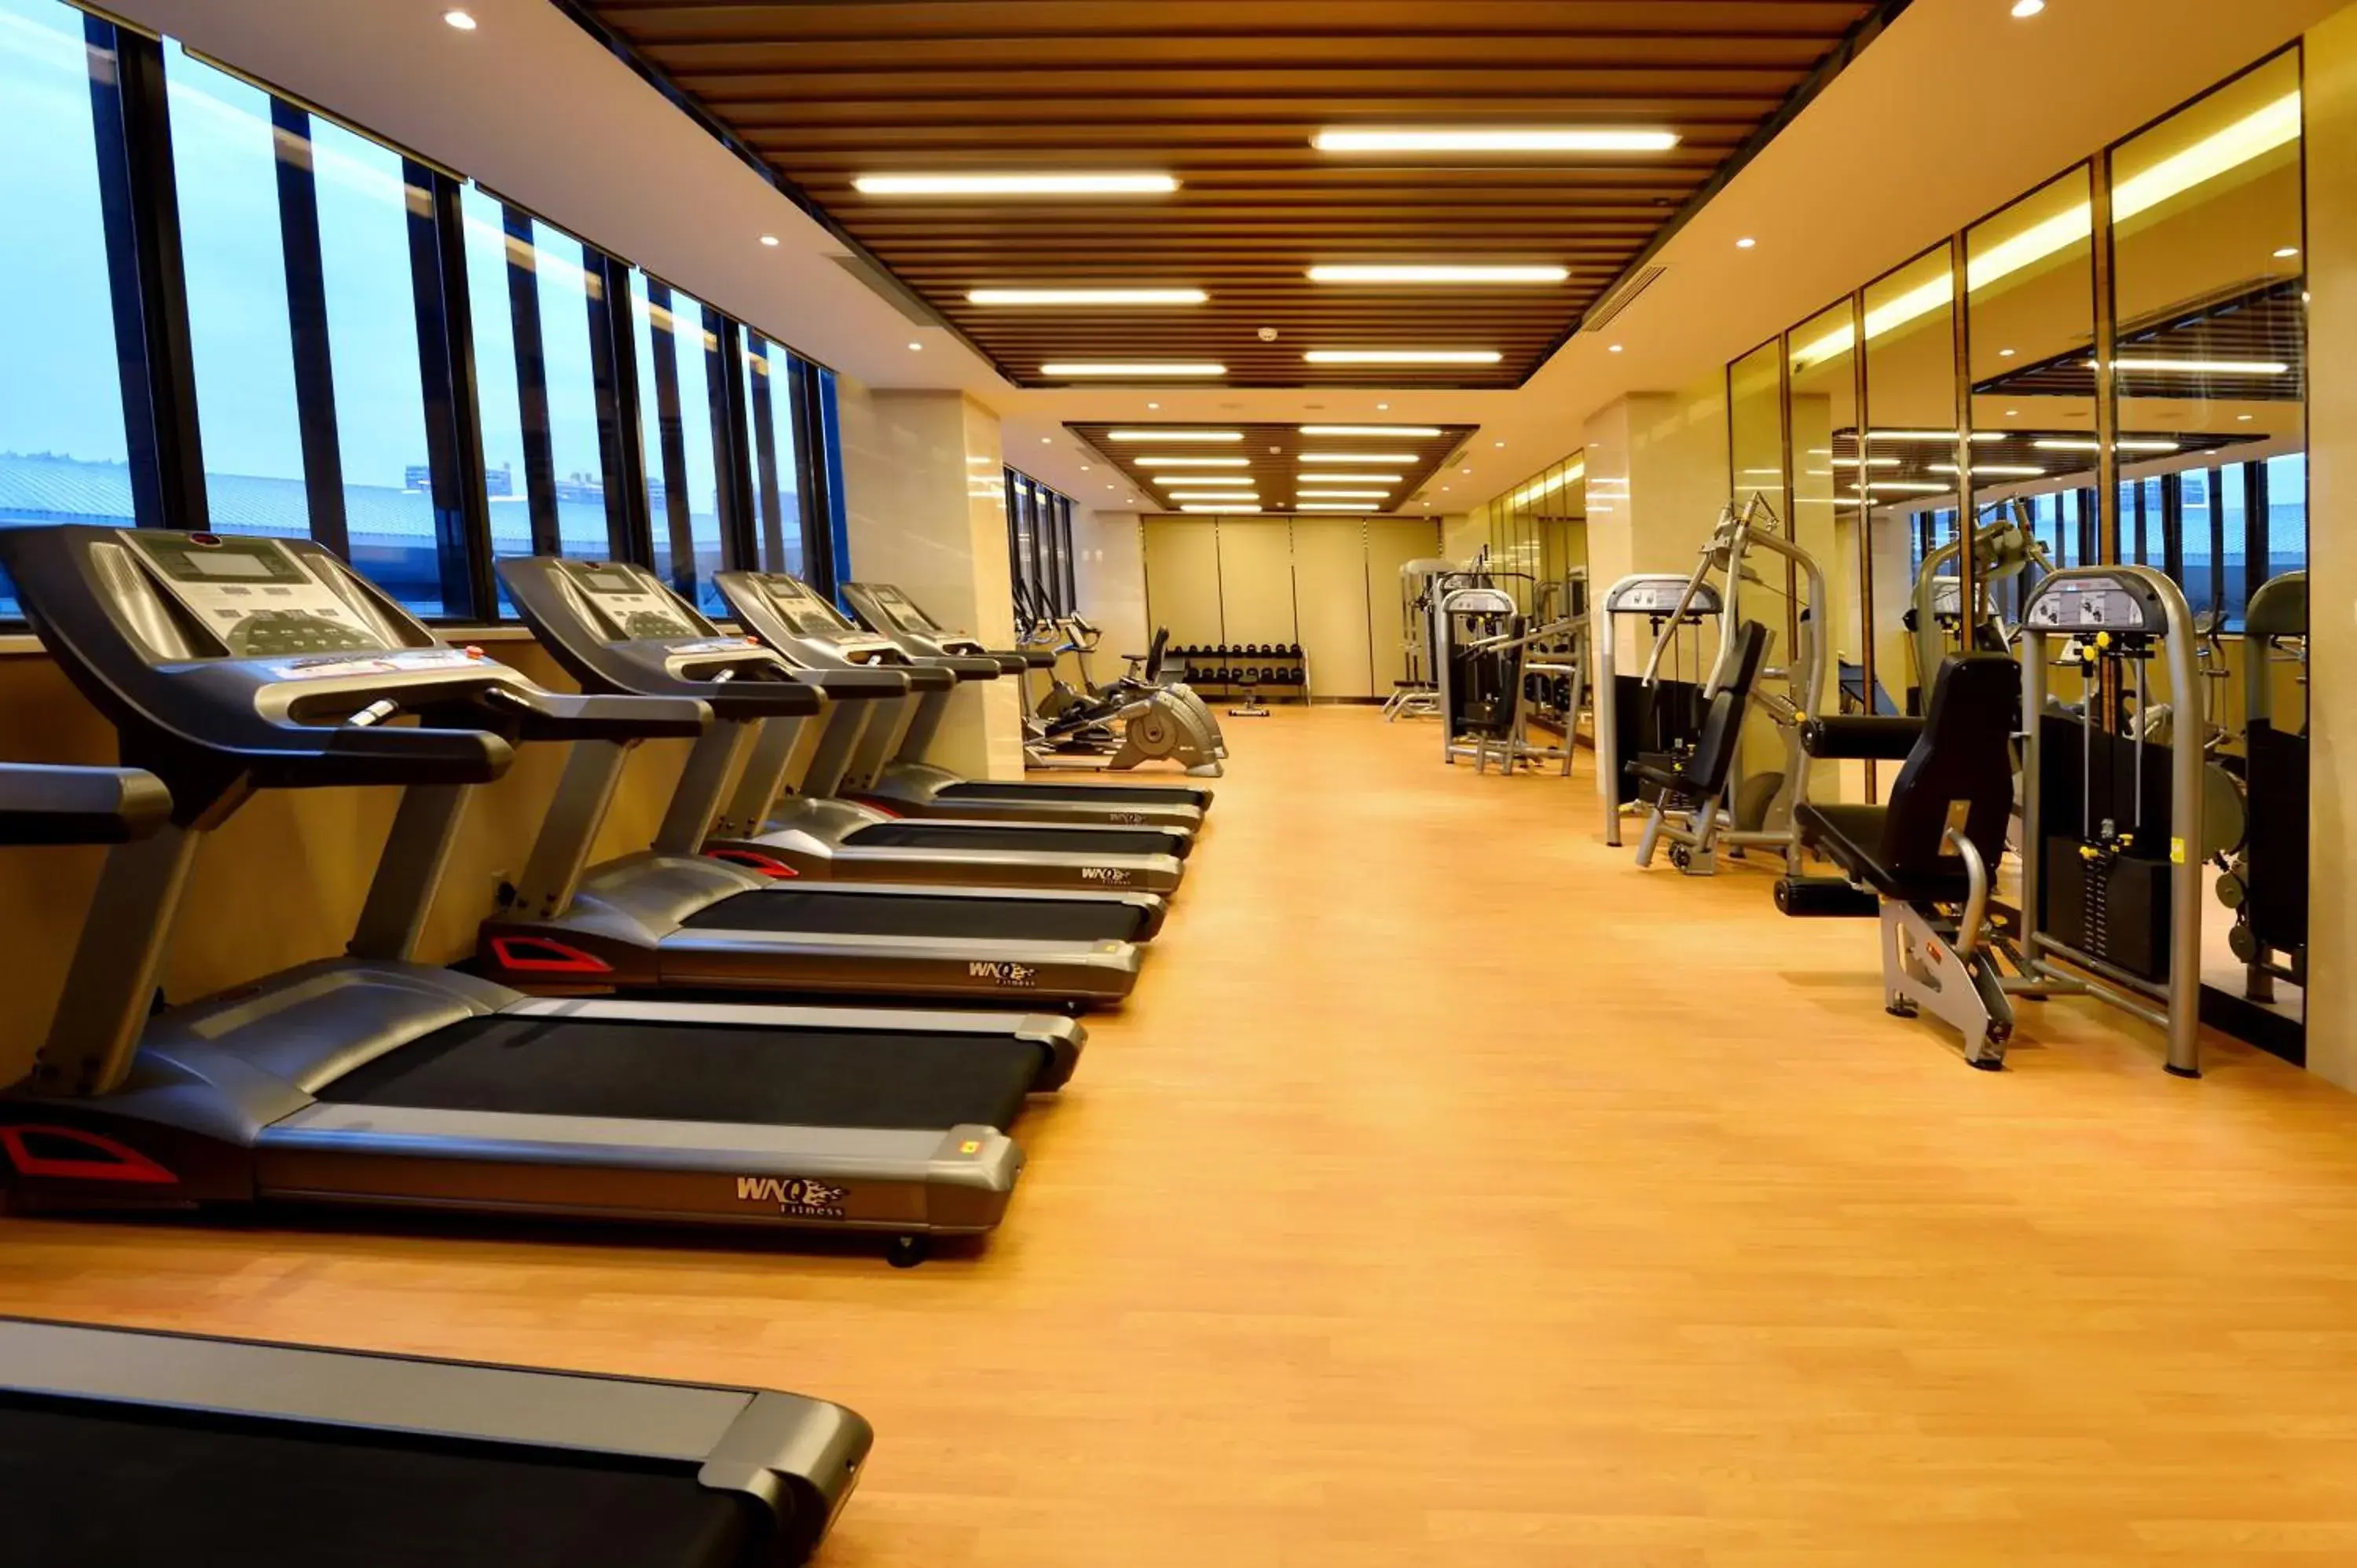 Fitness centre/facilities, Fitness Center/Facilities in Grand Skylight International Hotel Huizhou